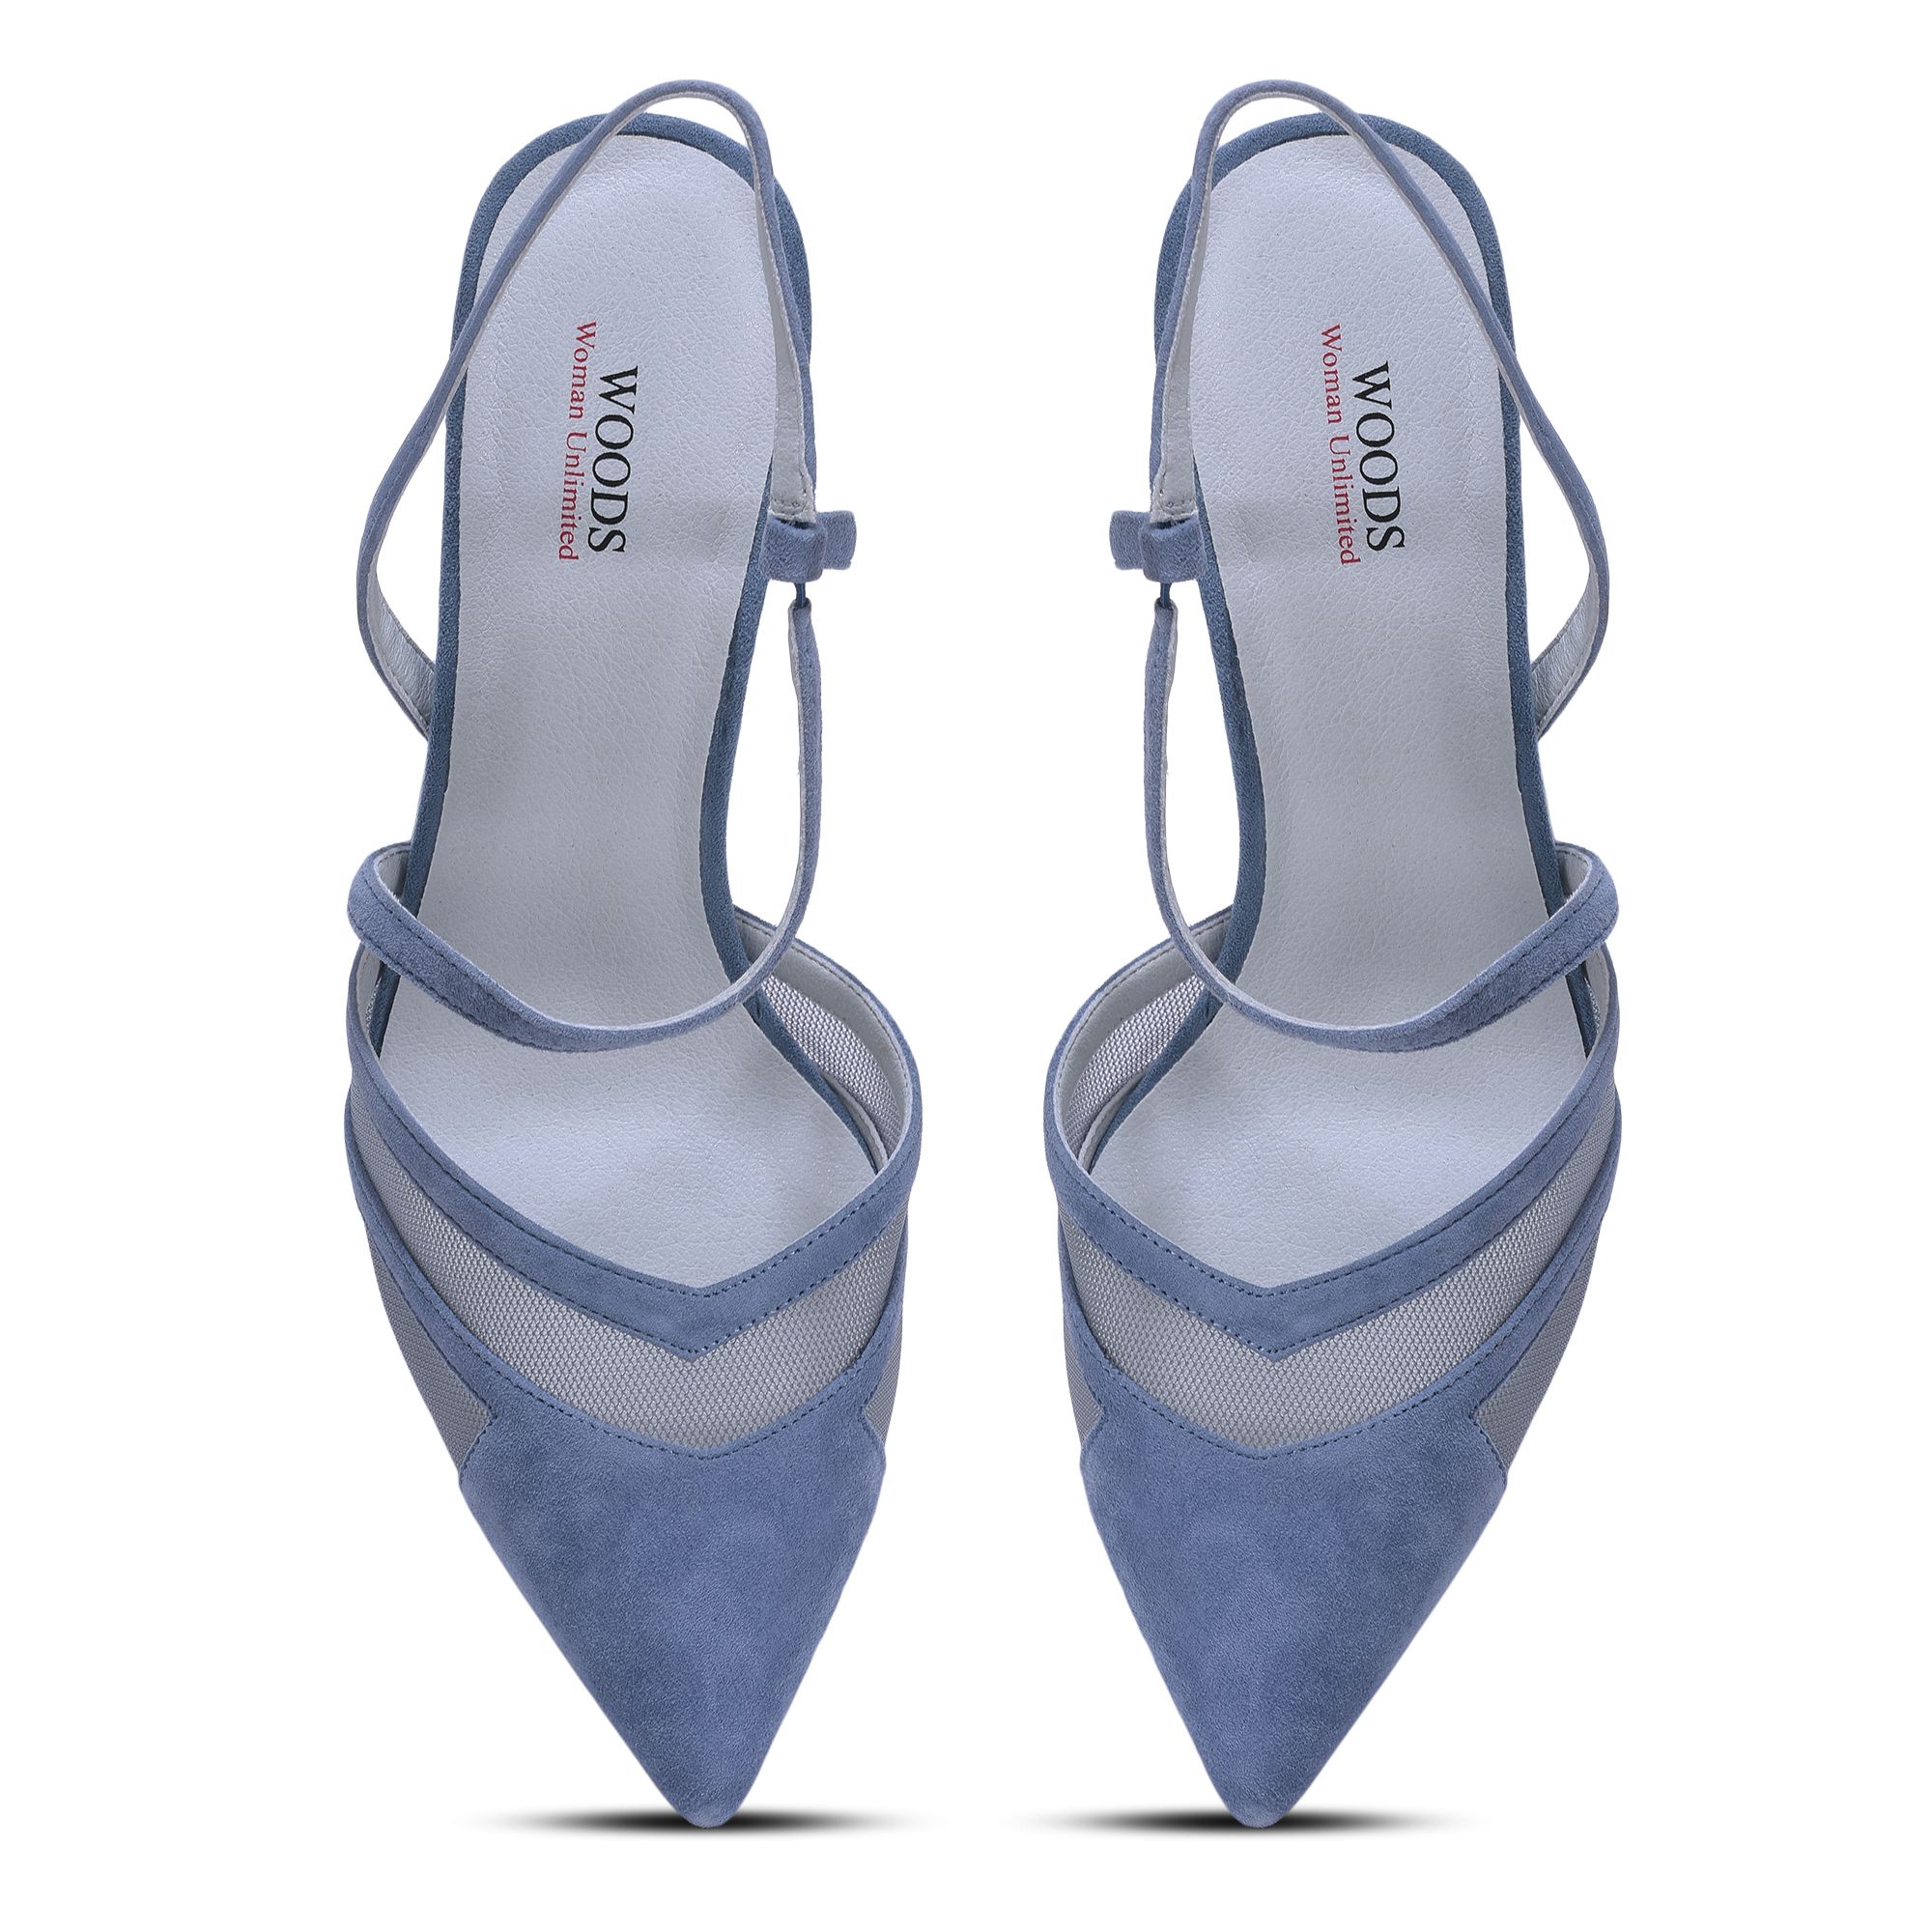 Blue/Light grey ankle strap sandal